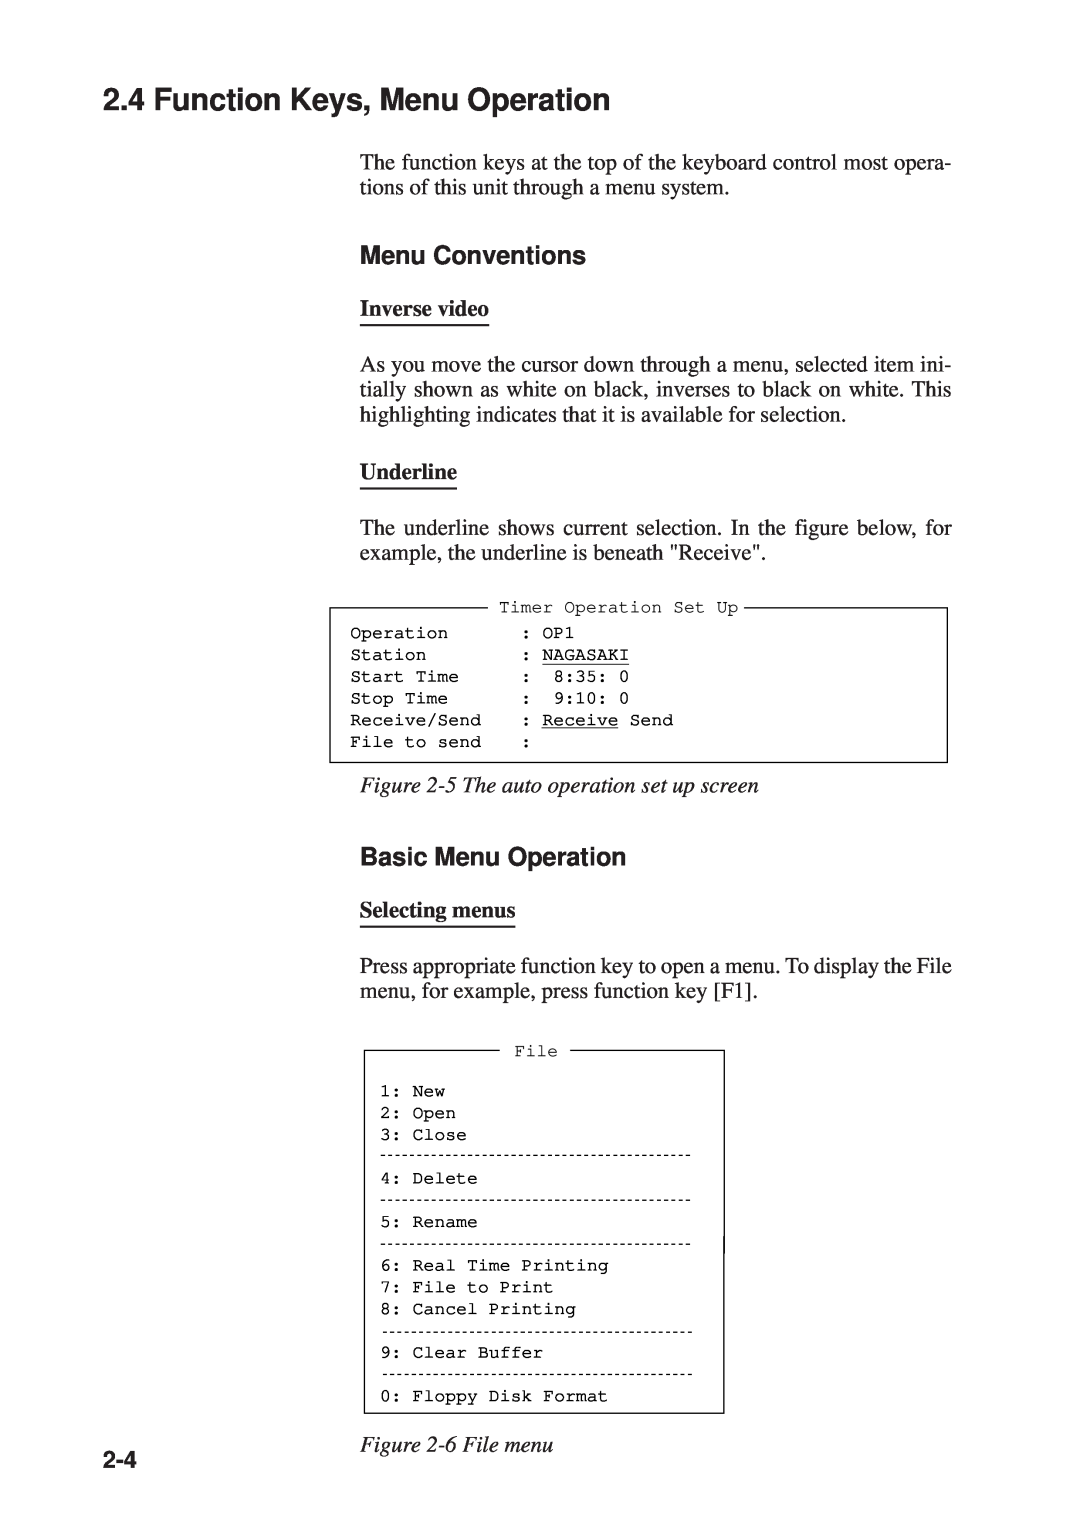 Furuno RC-1500-1T manual Function Keys, Menu Operation, Menu Conventions, Basic Menu Operation, Inverse video, Underline 